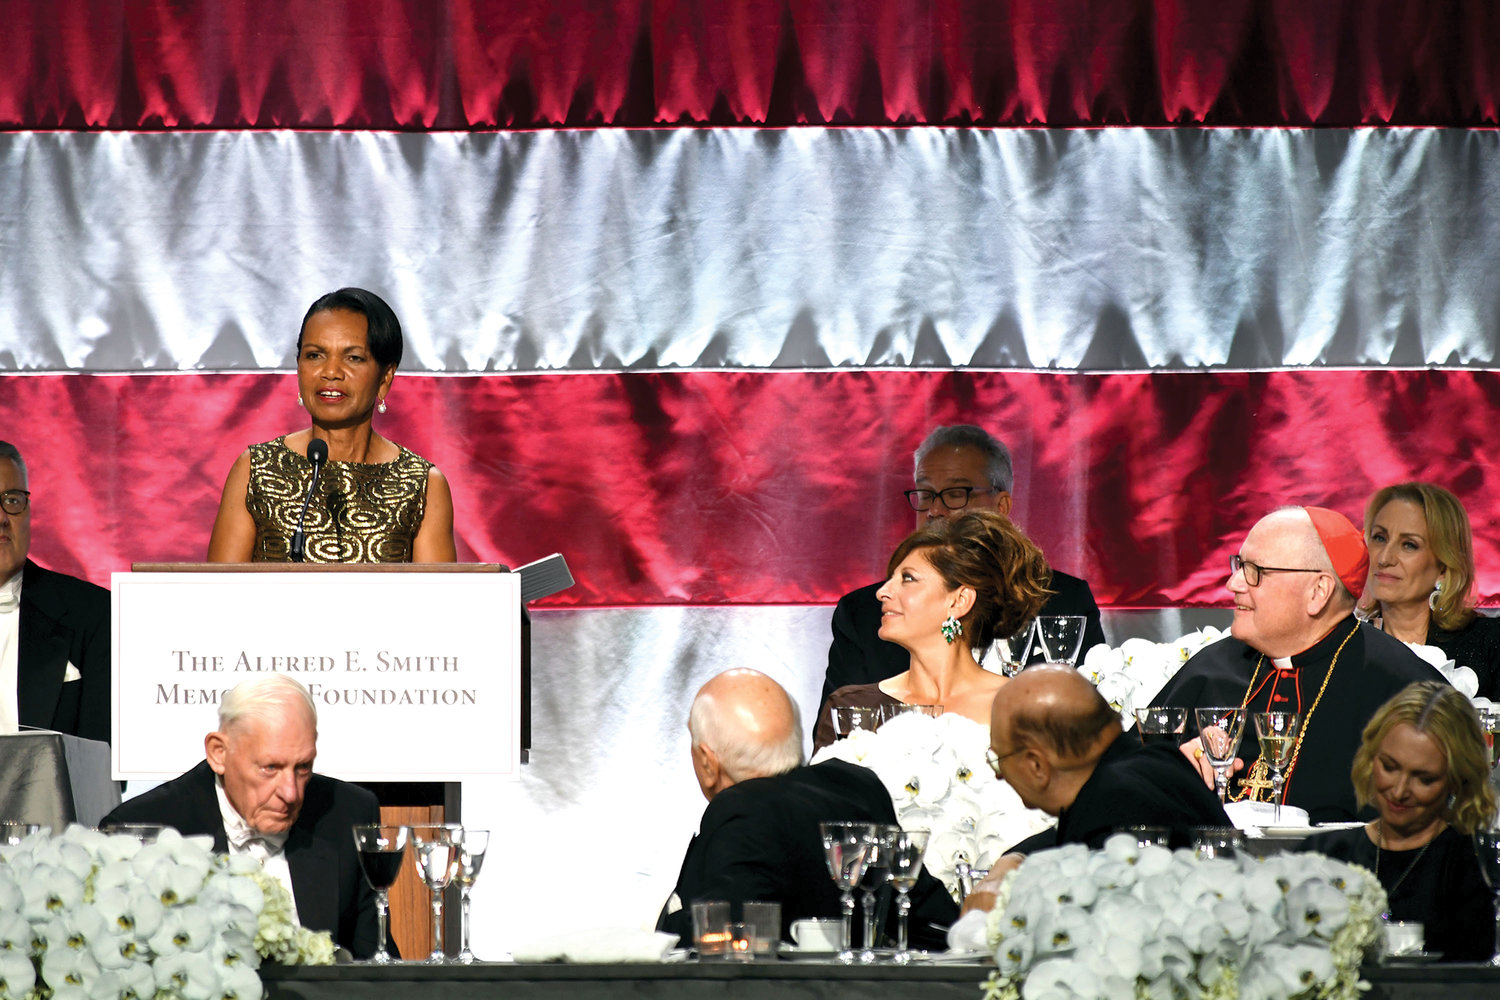 Condoleezza Rice, former U.S. Secretary of State, delivers the keynote address.